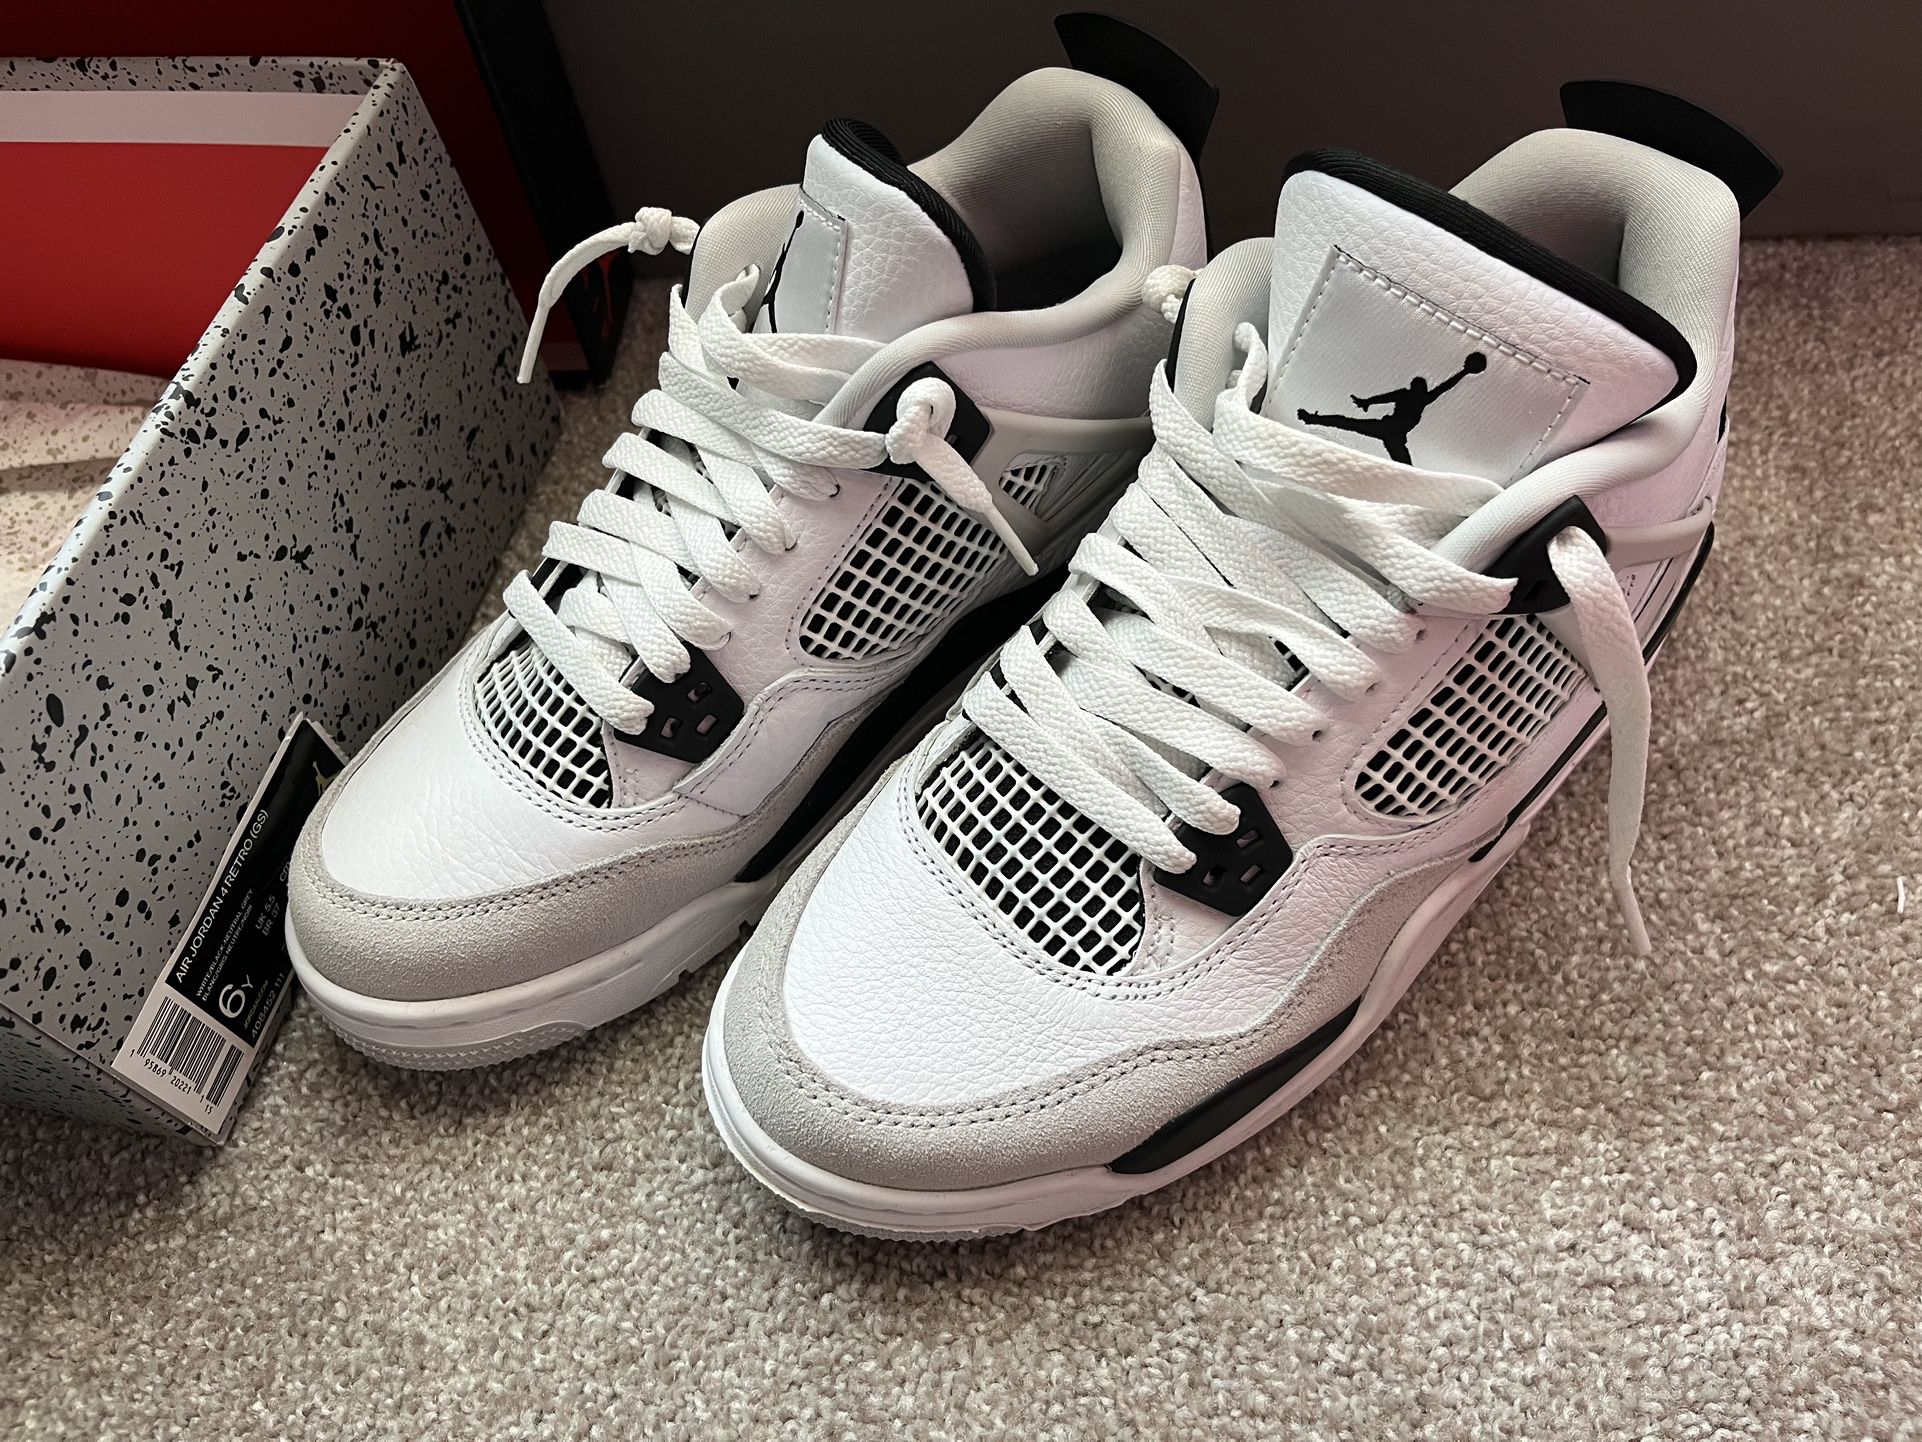 Nike Air Jordan Retro IV 